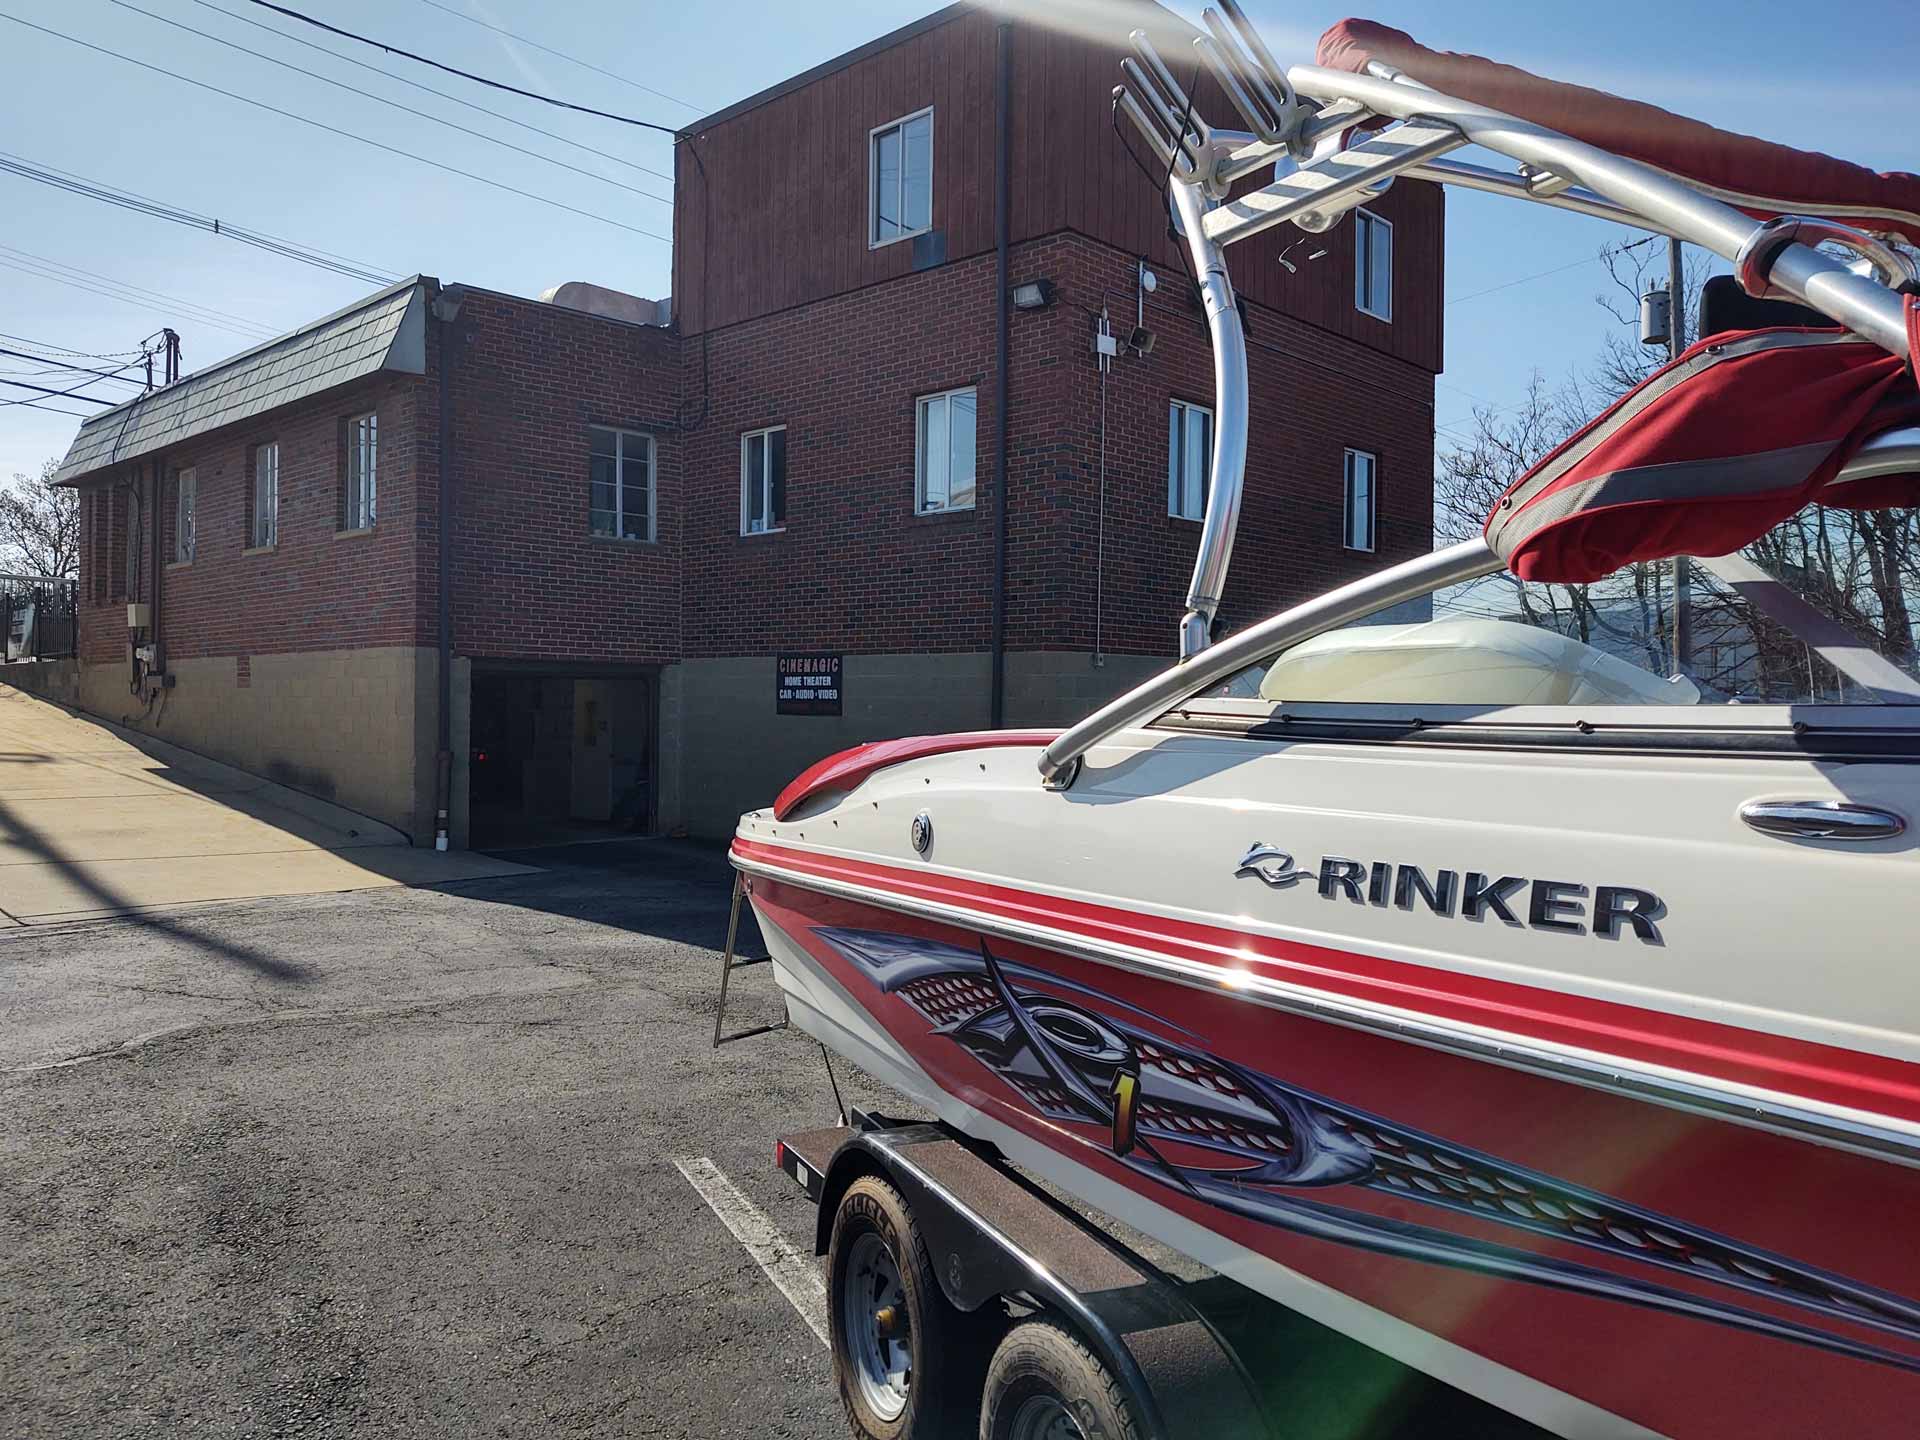 Red Rinker boat